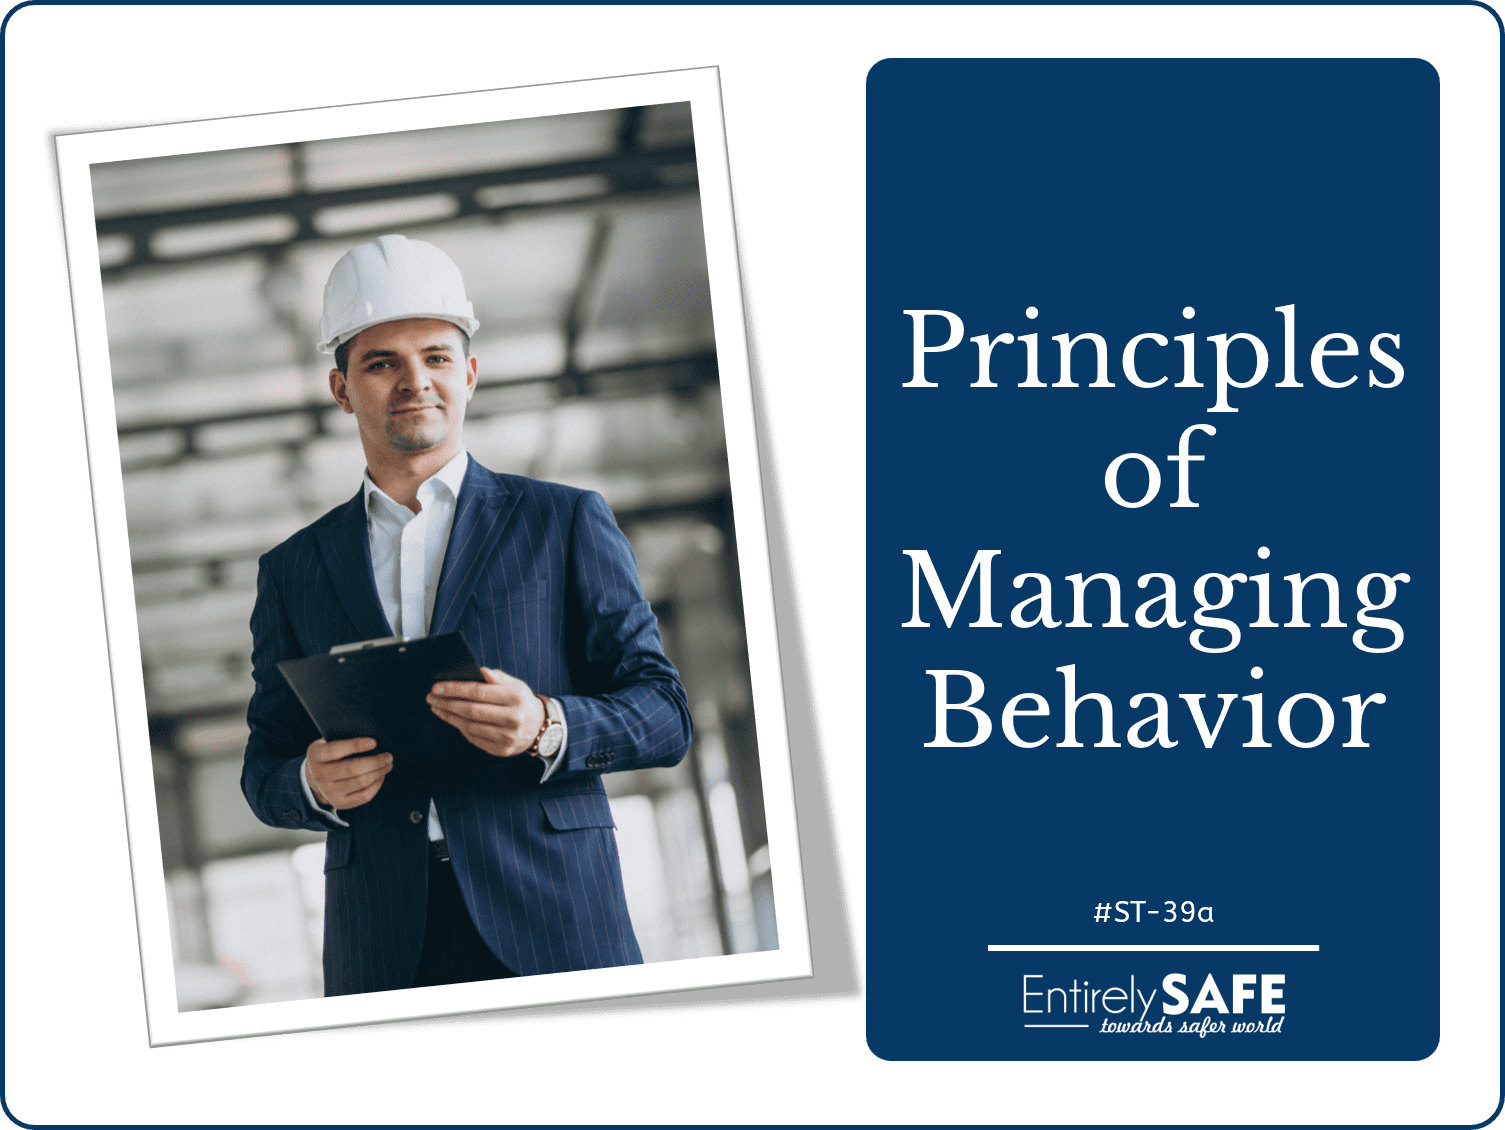 st-39a-Principles-of-managing-behavior-training-presentation-free-download (1)